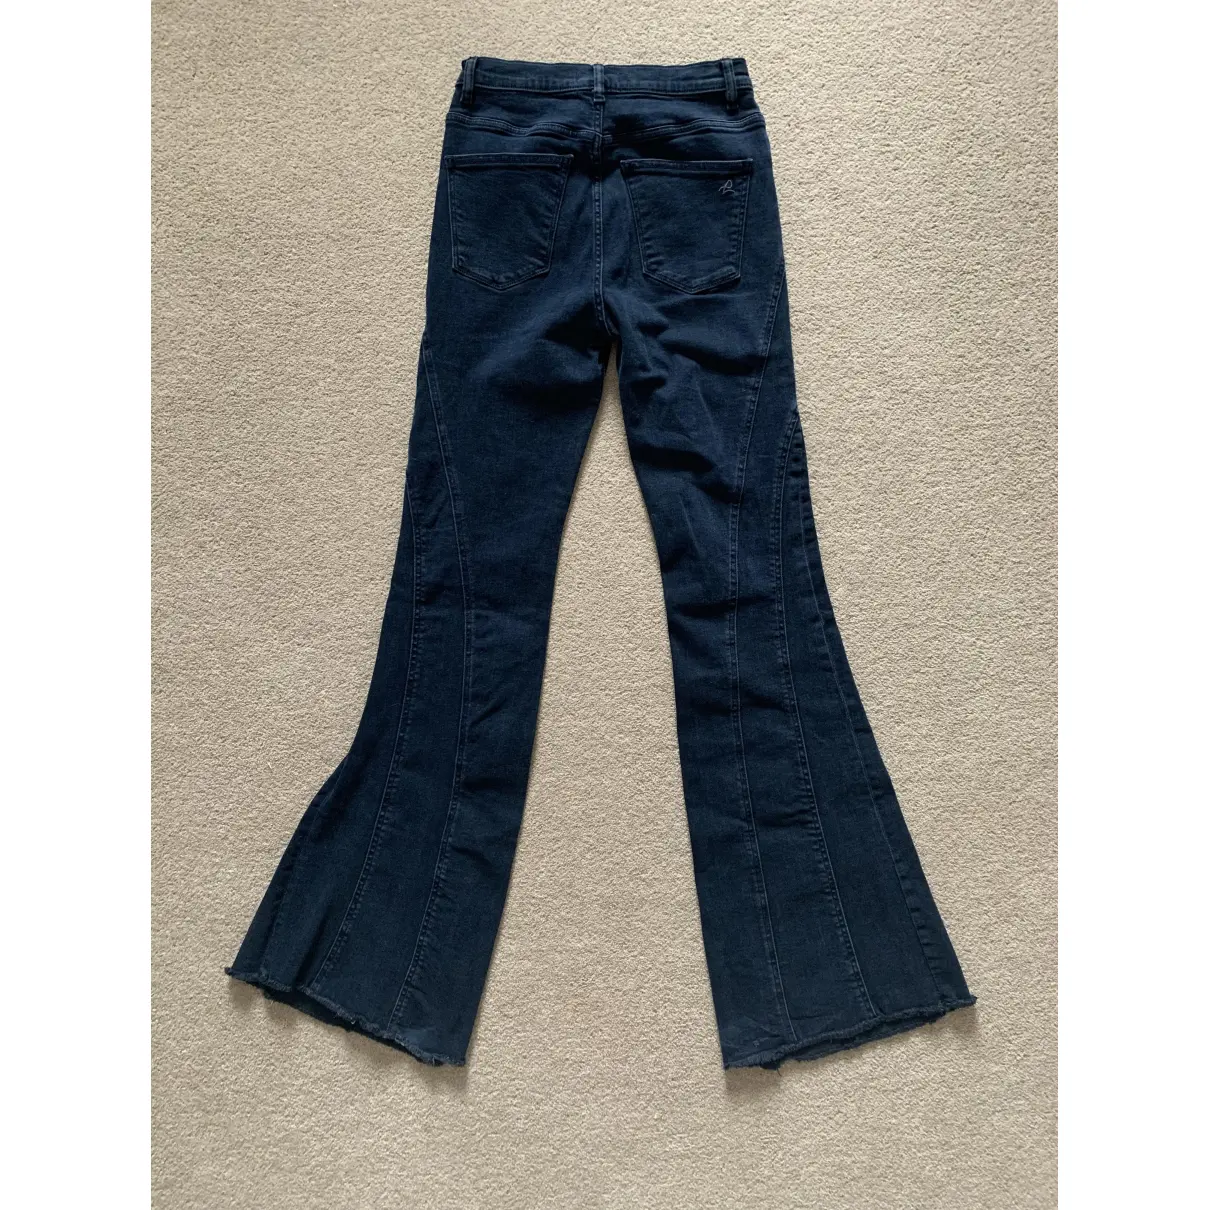 Buy DL1961 Navy Cotton - elasthane Jeans online